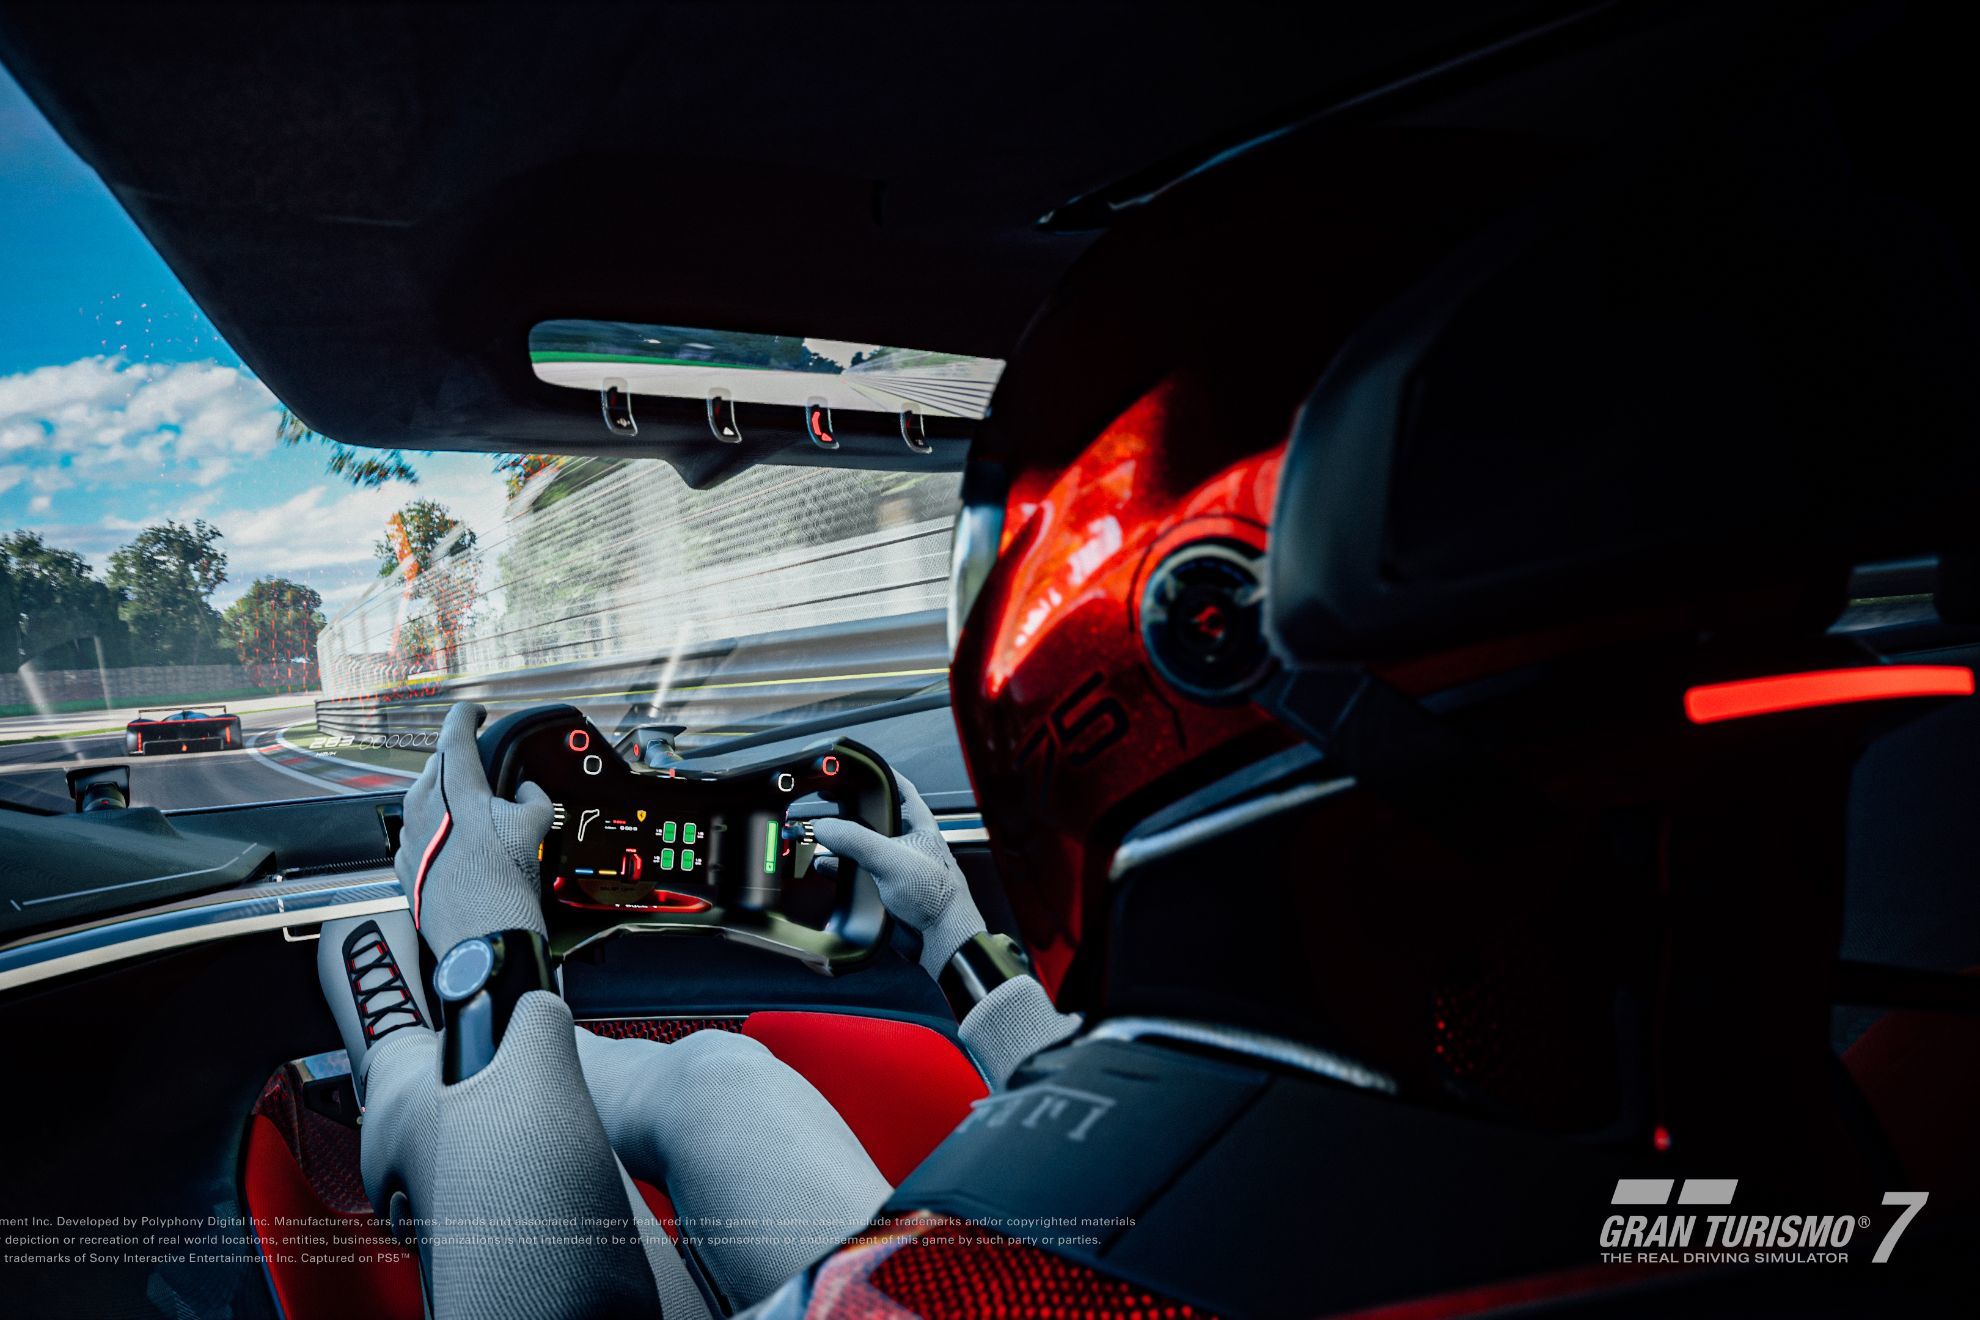 El Ferrari Vision Gran Turismo estar disponible en la PlayStation a finales de diciembre.